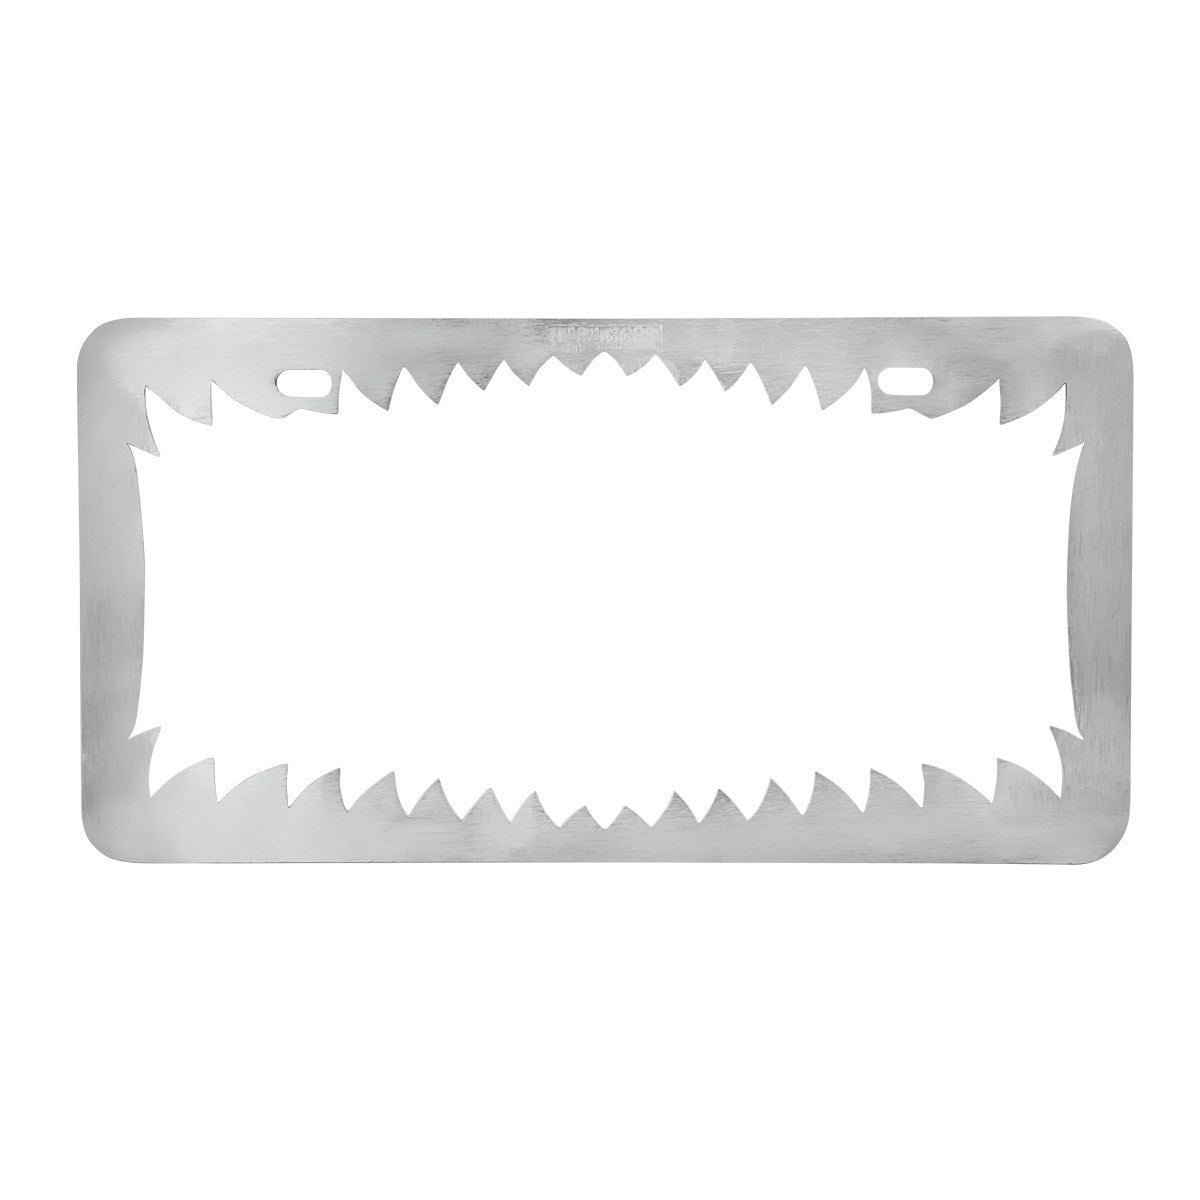 Chrome Shark Teeth License Plate Frame